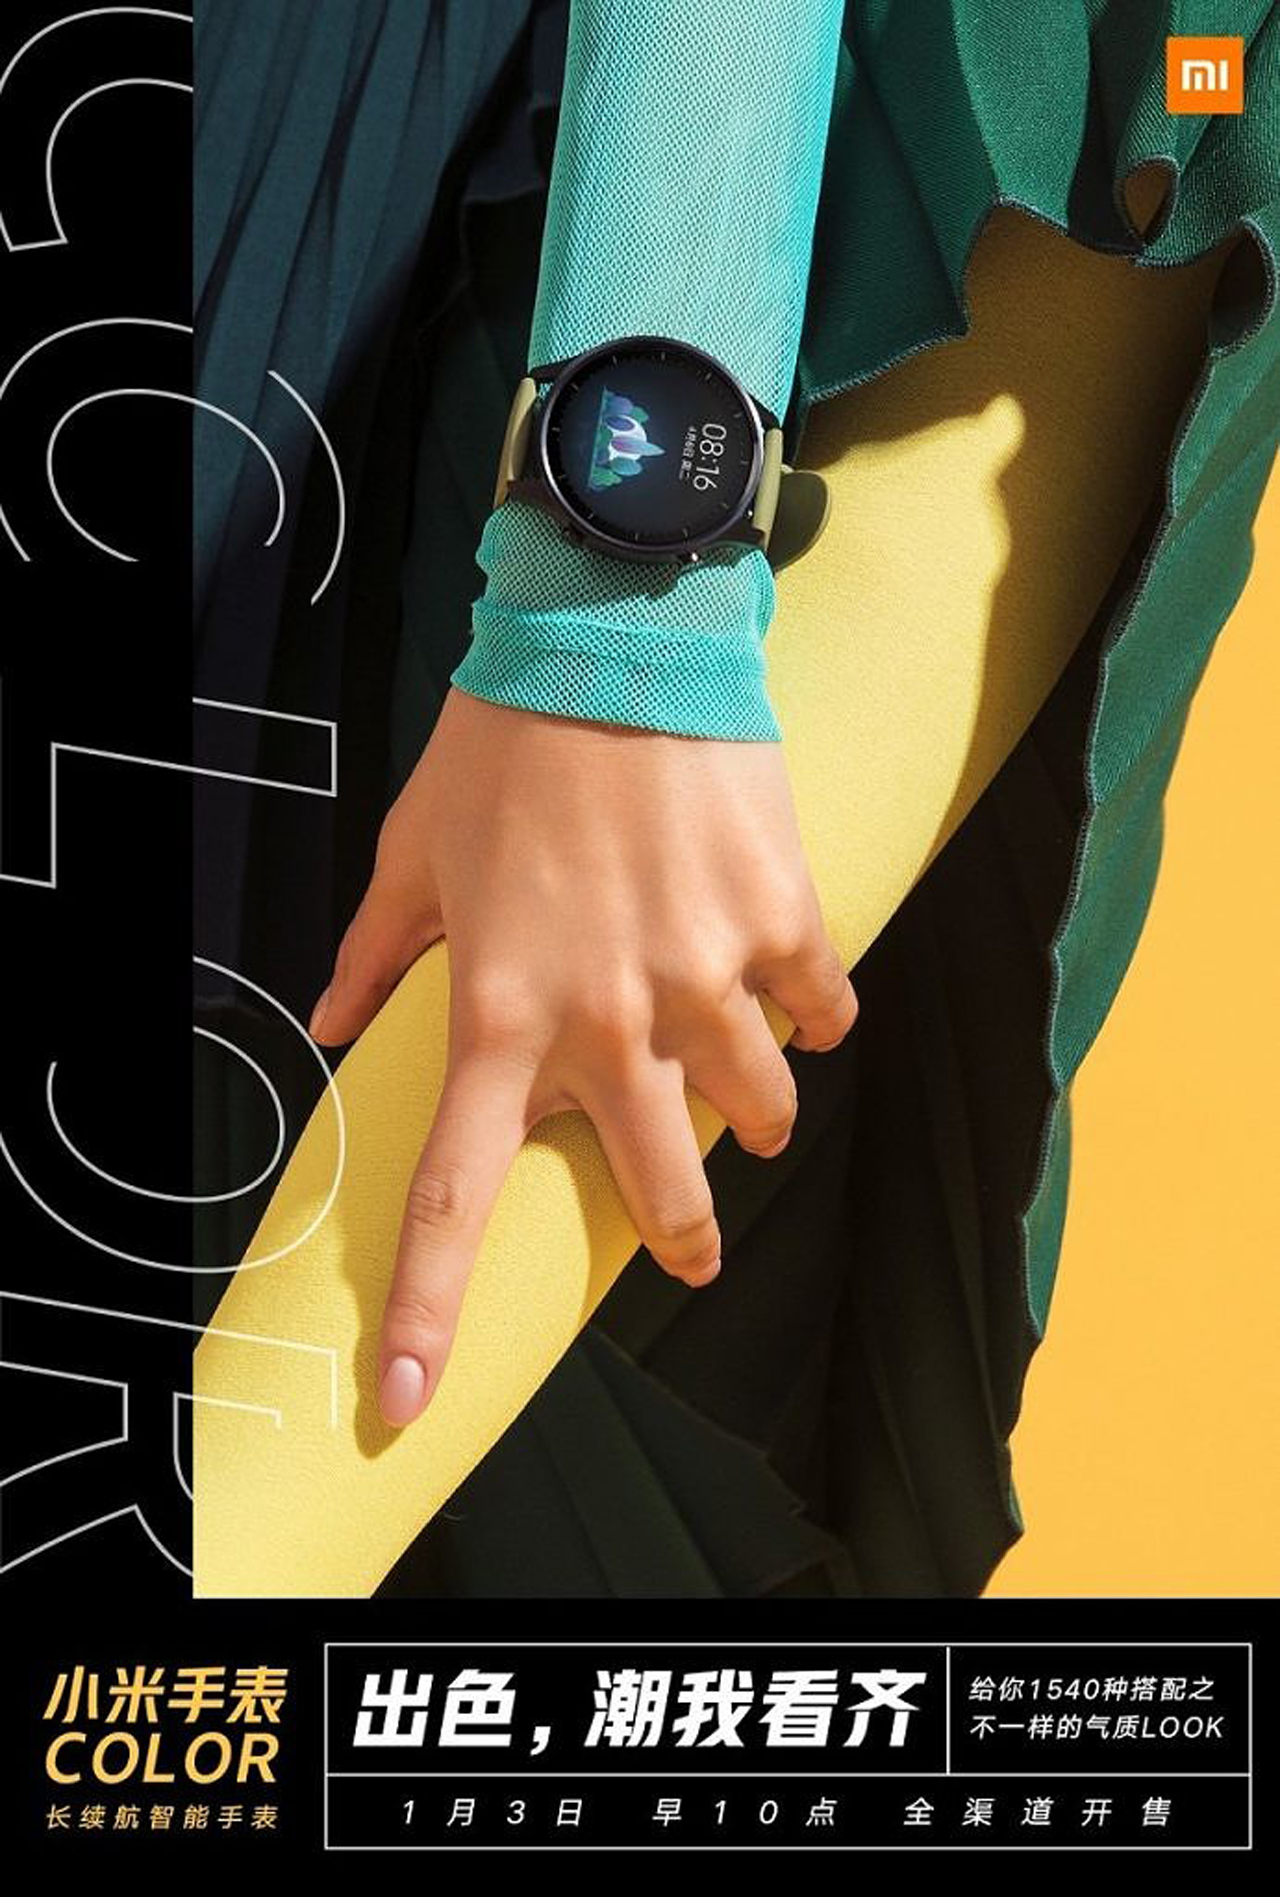 Xiaomi Mi Watch Color announced 2